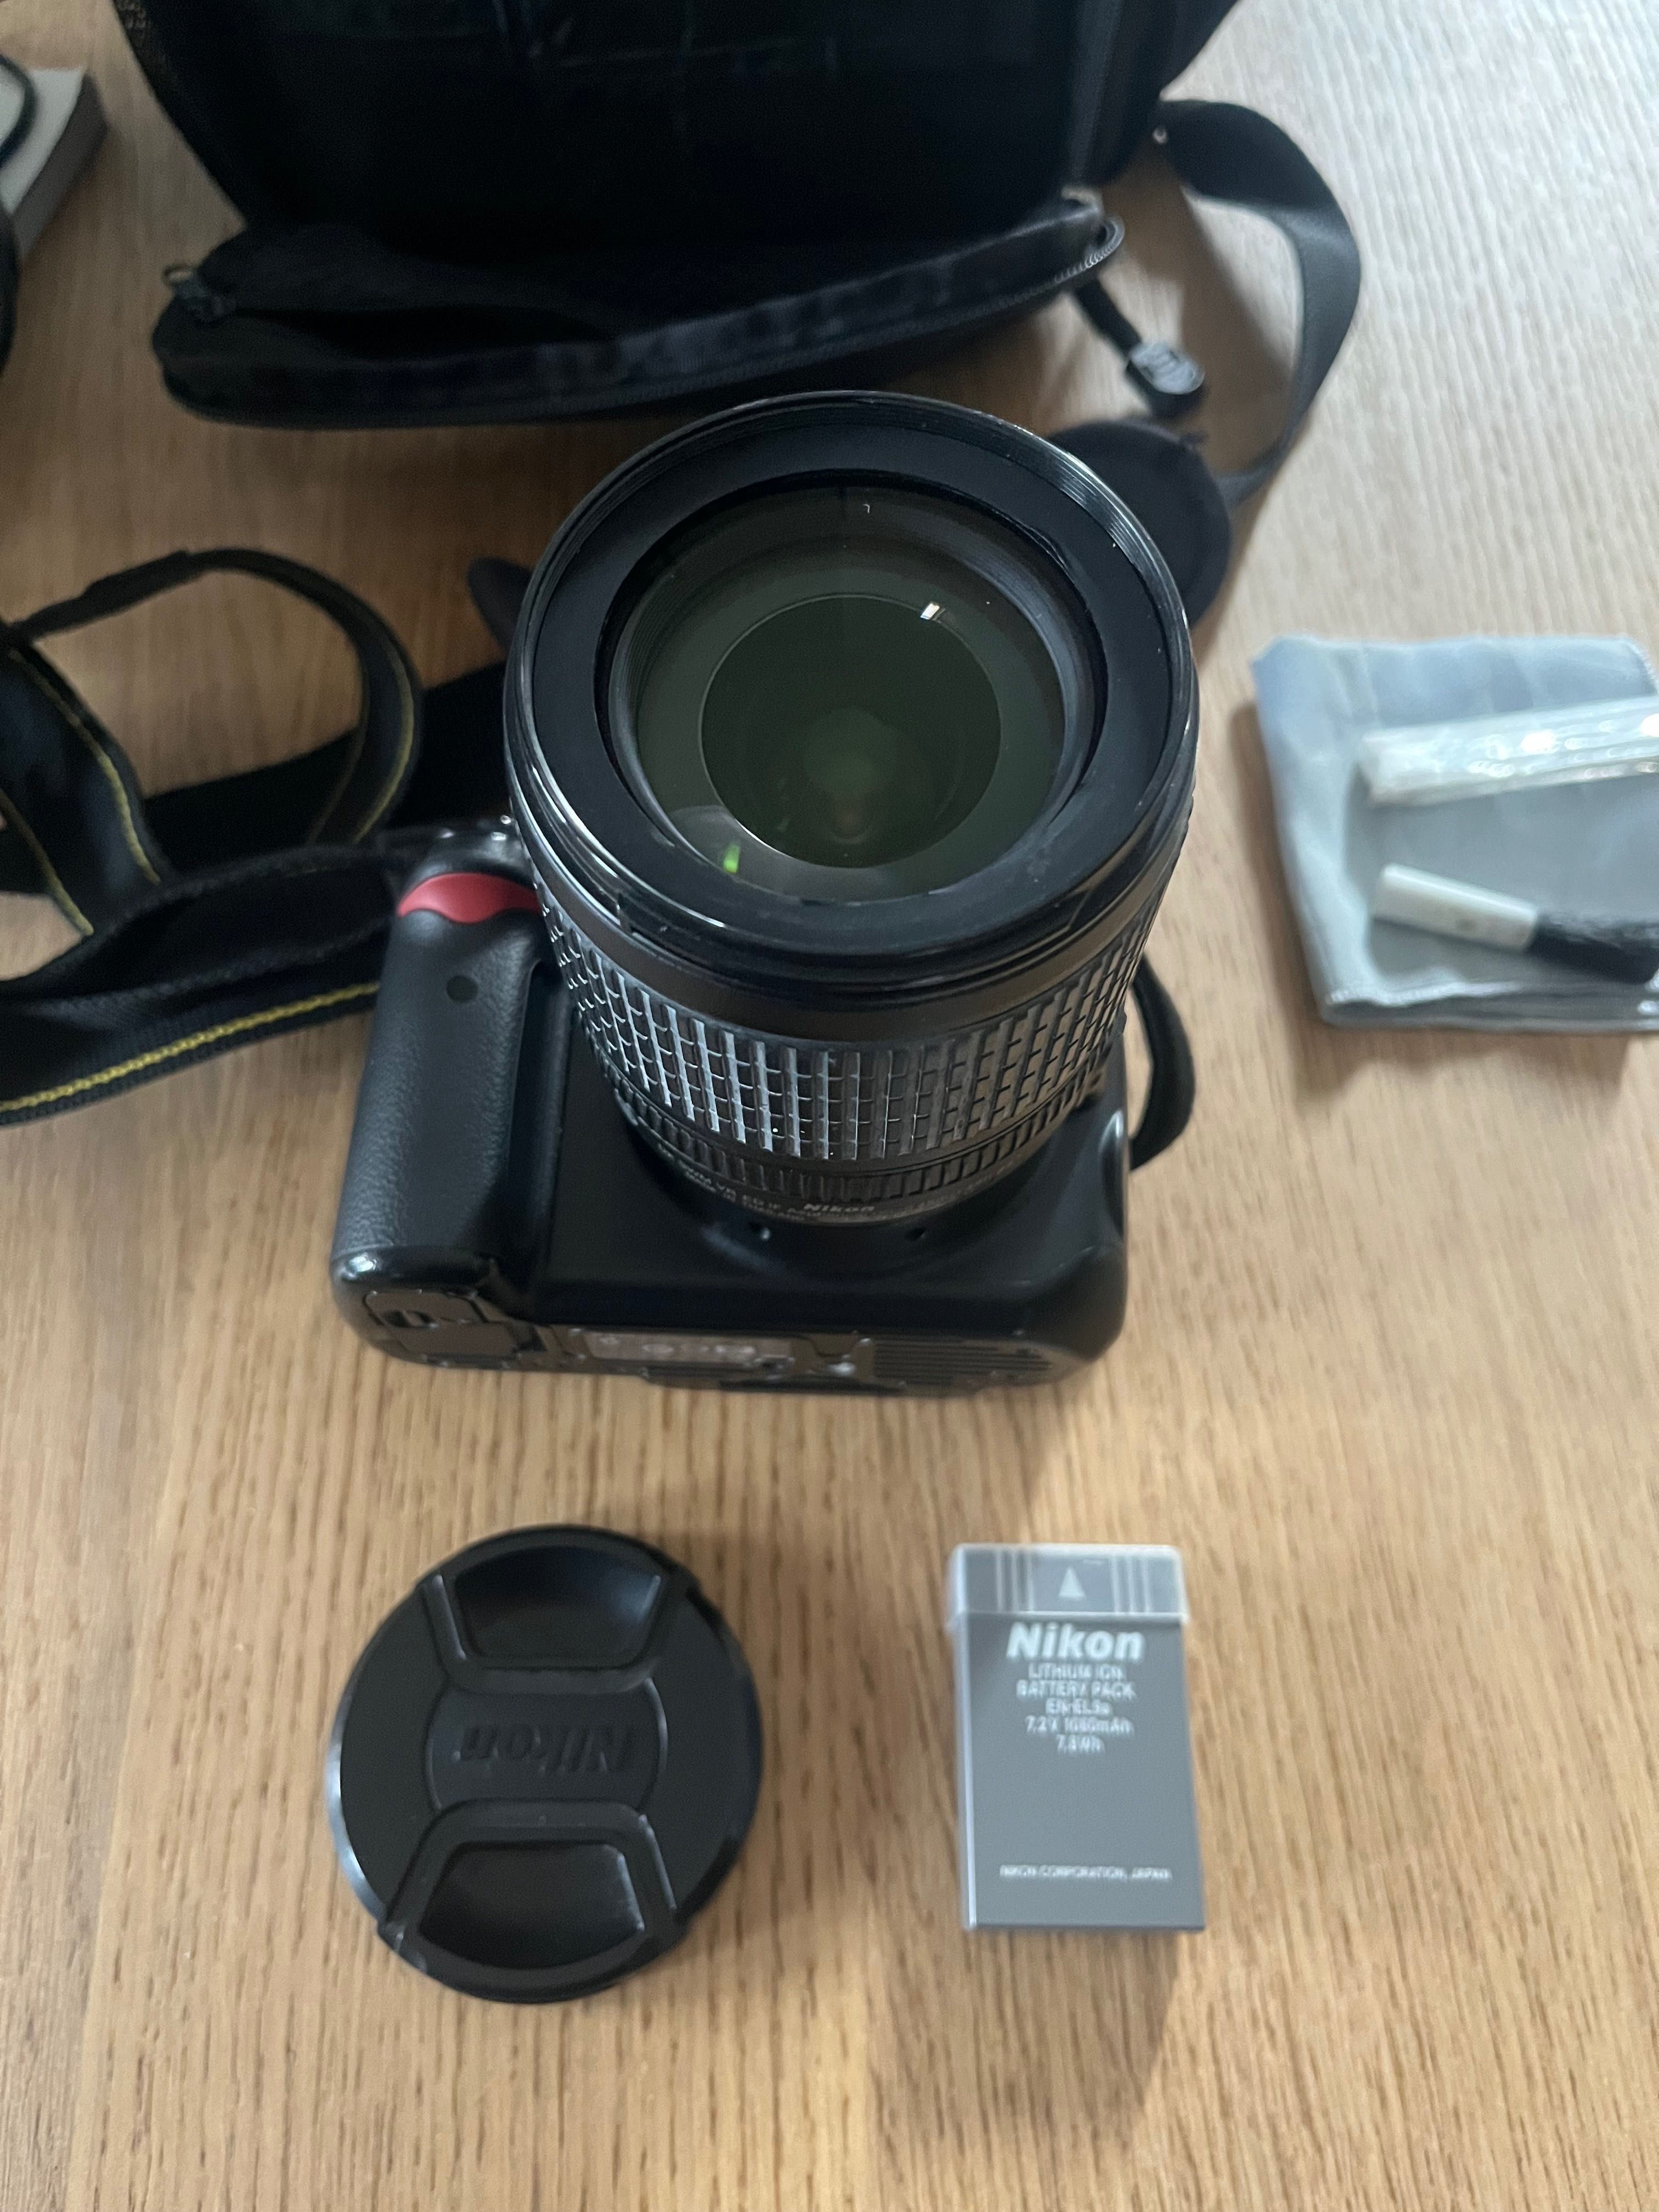 Aparat Nikon D5000 + obiektyw 18-105mm